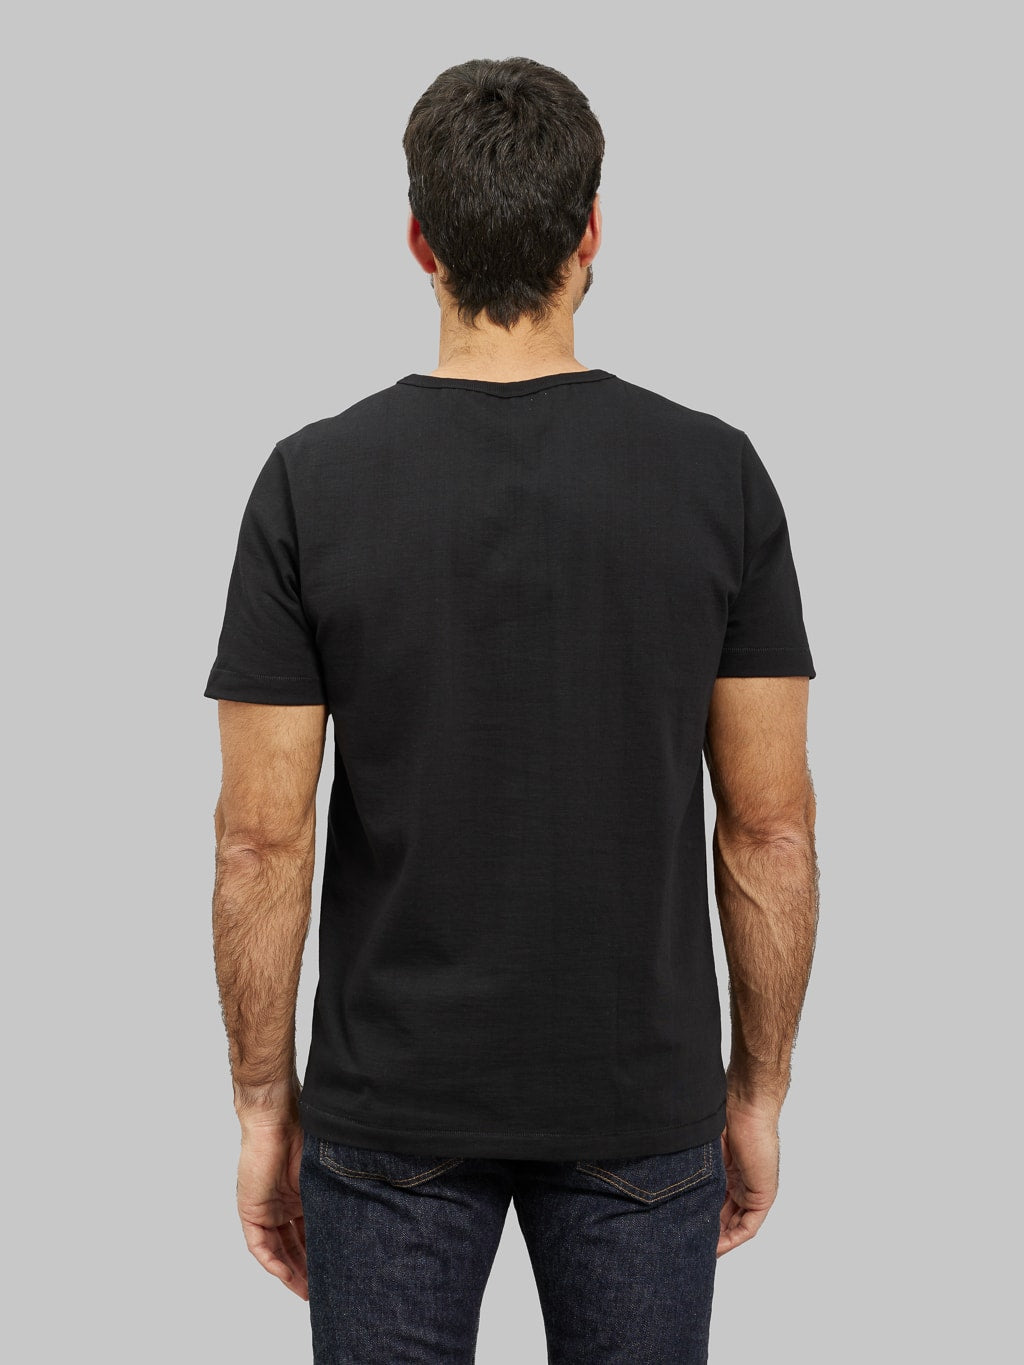 merz b schwanen good originals loopwheeled Tshirt classic fit black back look